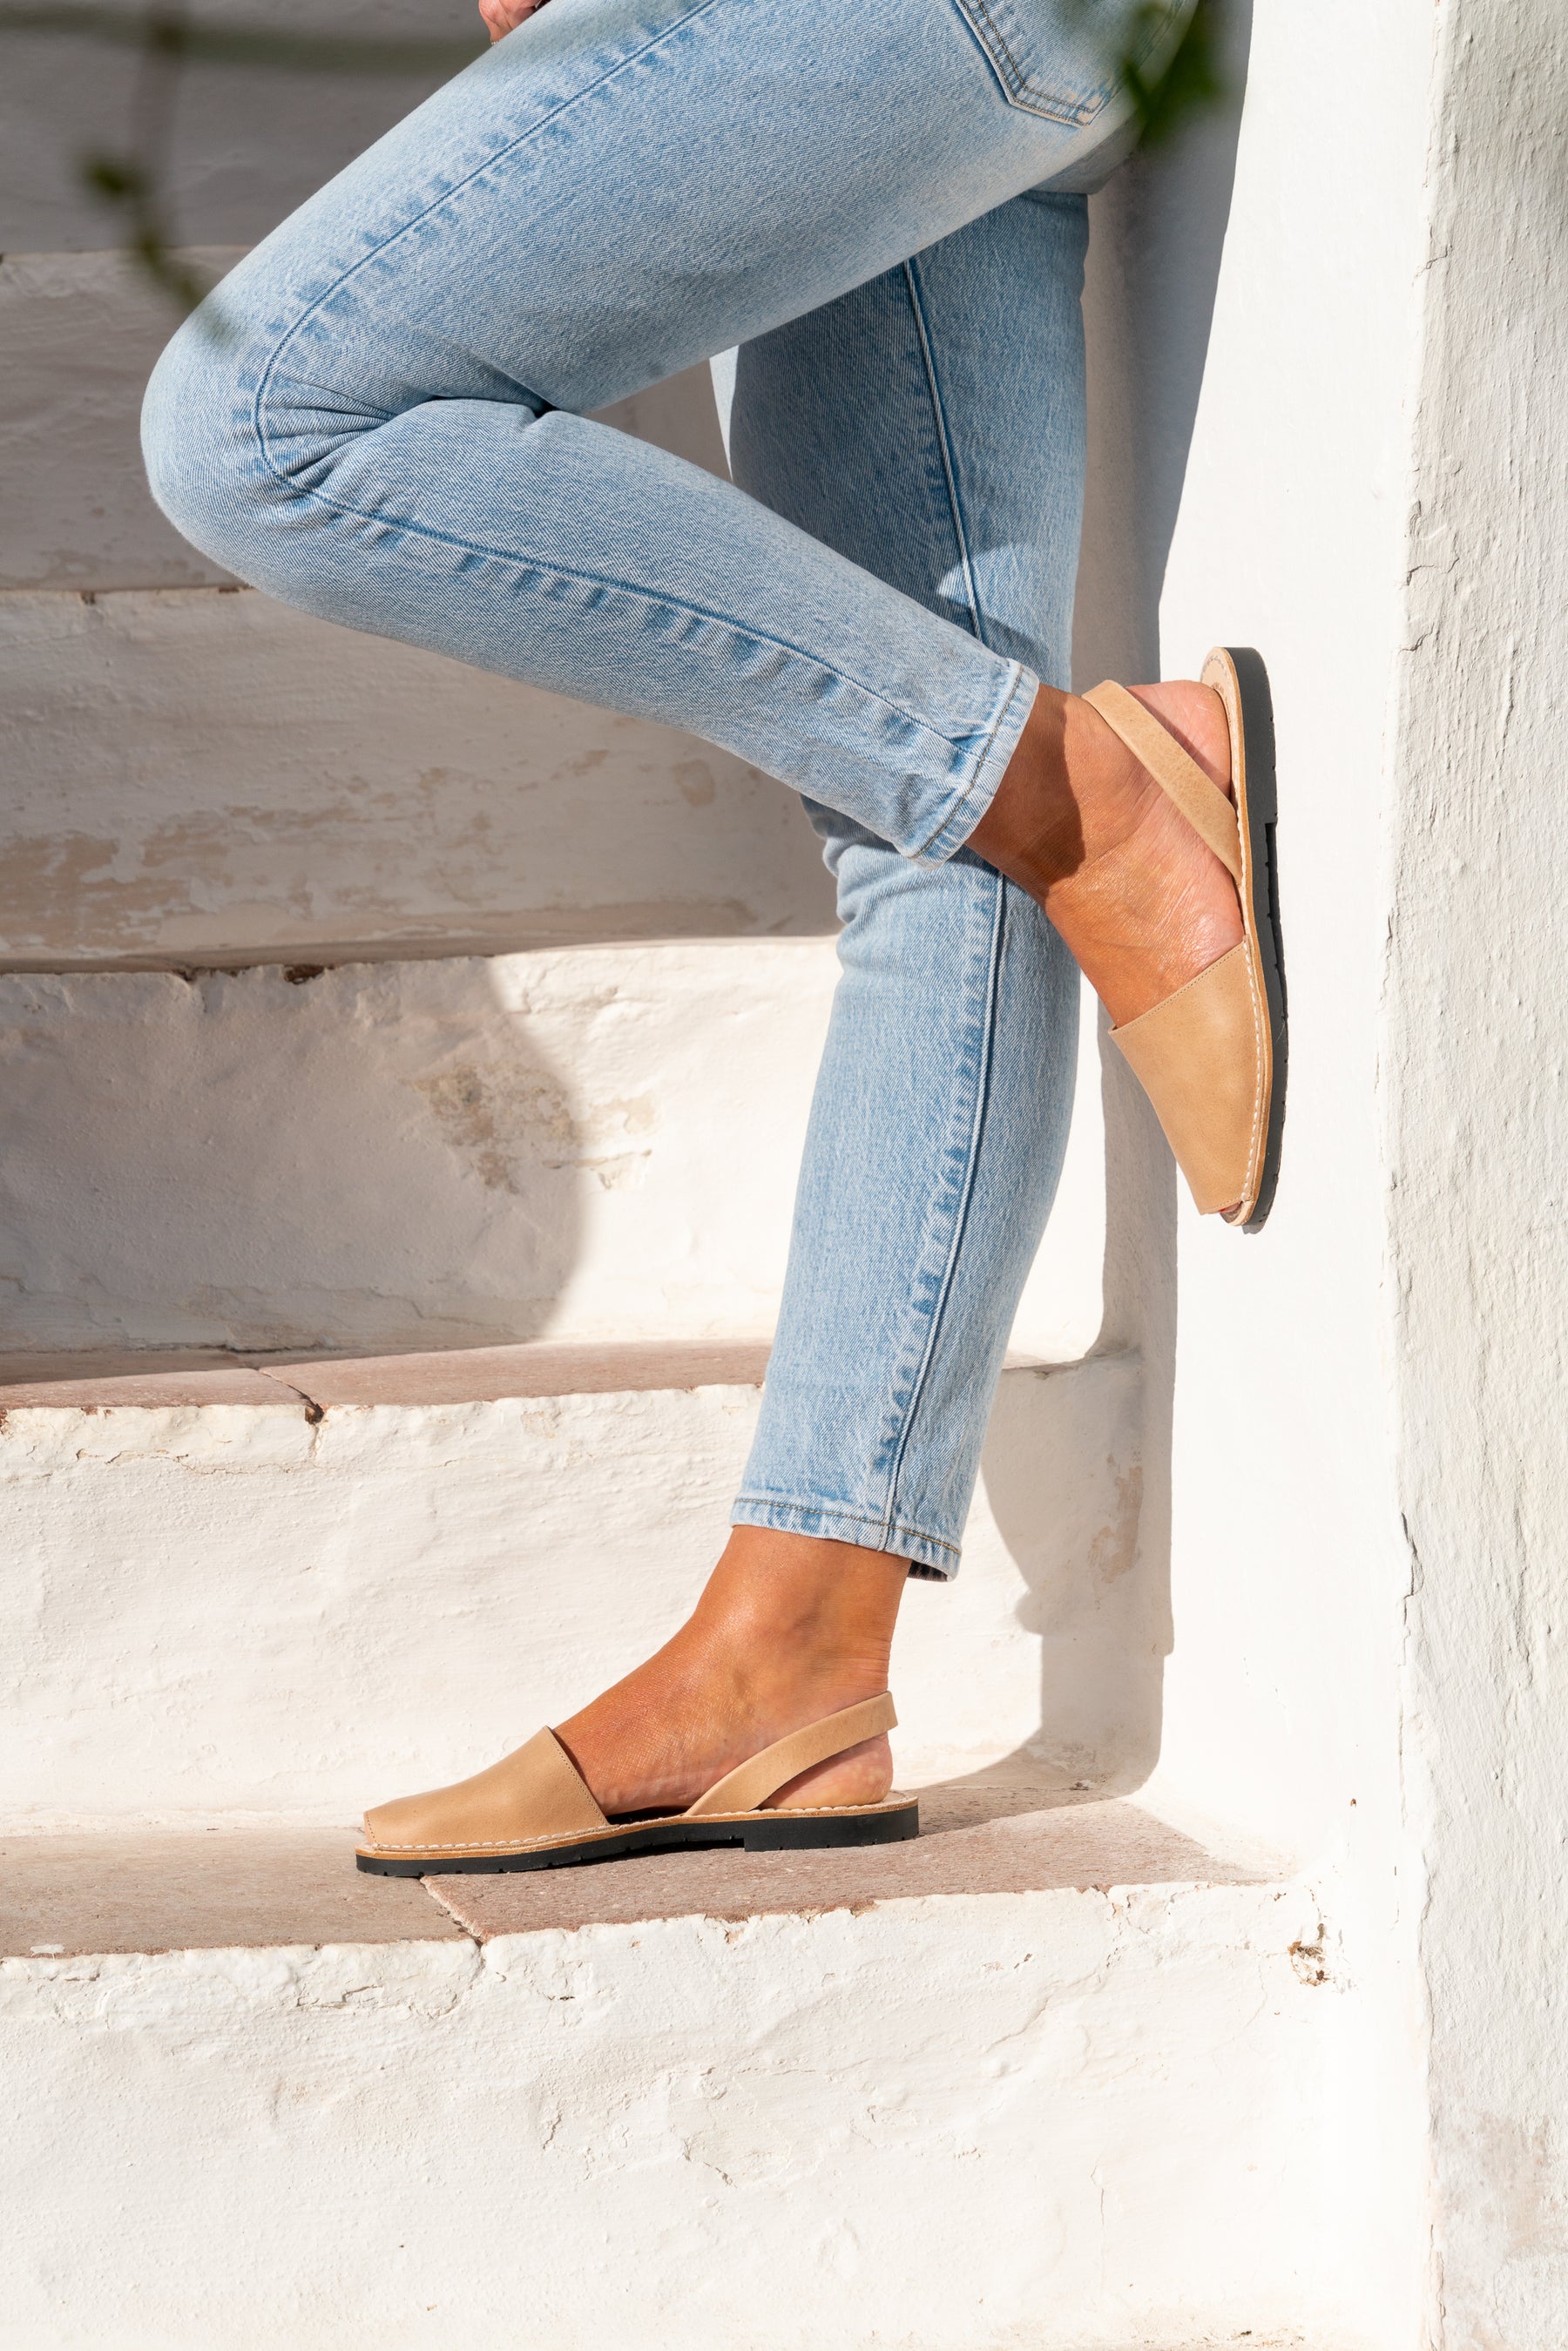 Tan Leather Menorcan Avarcas Sandals 